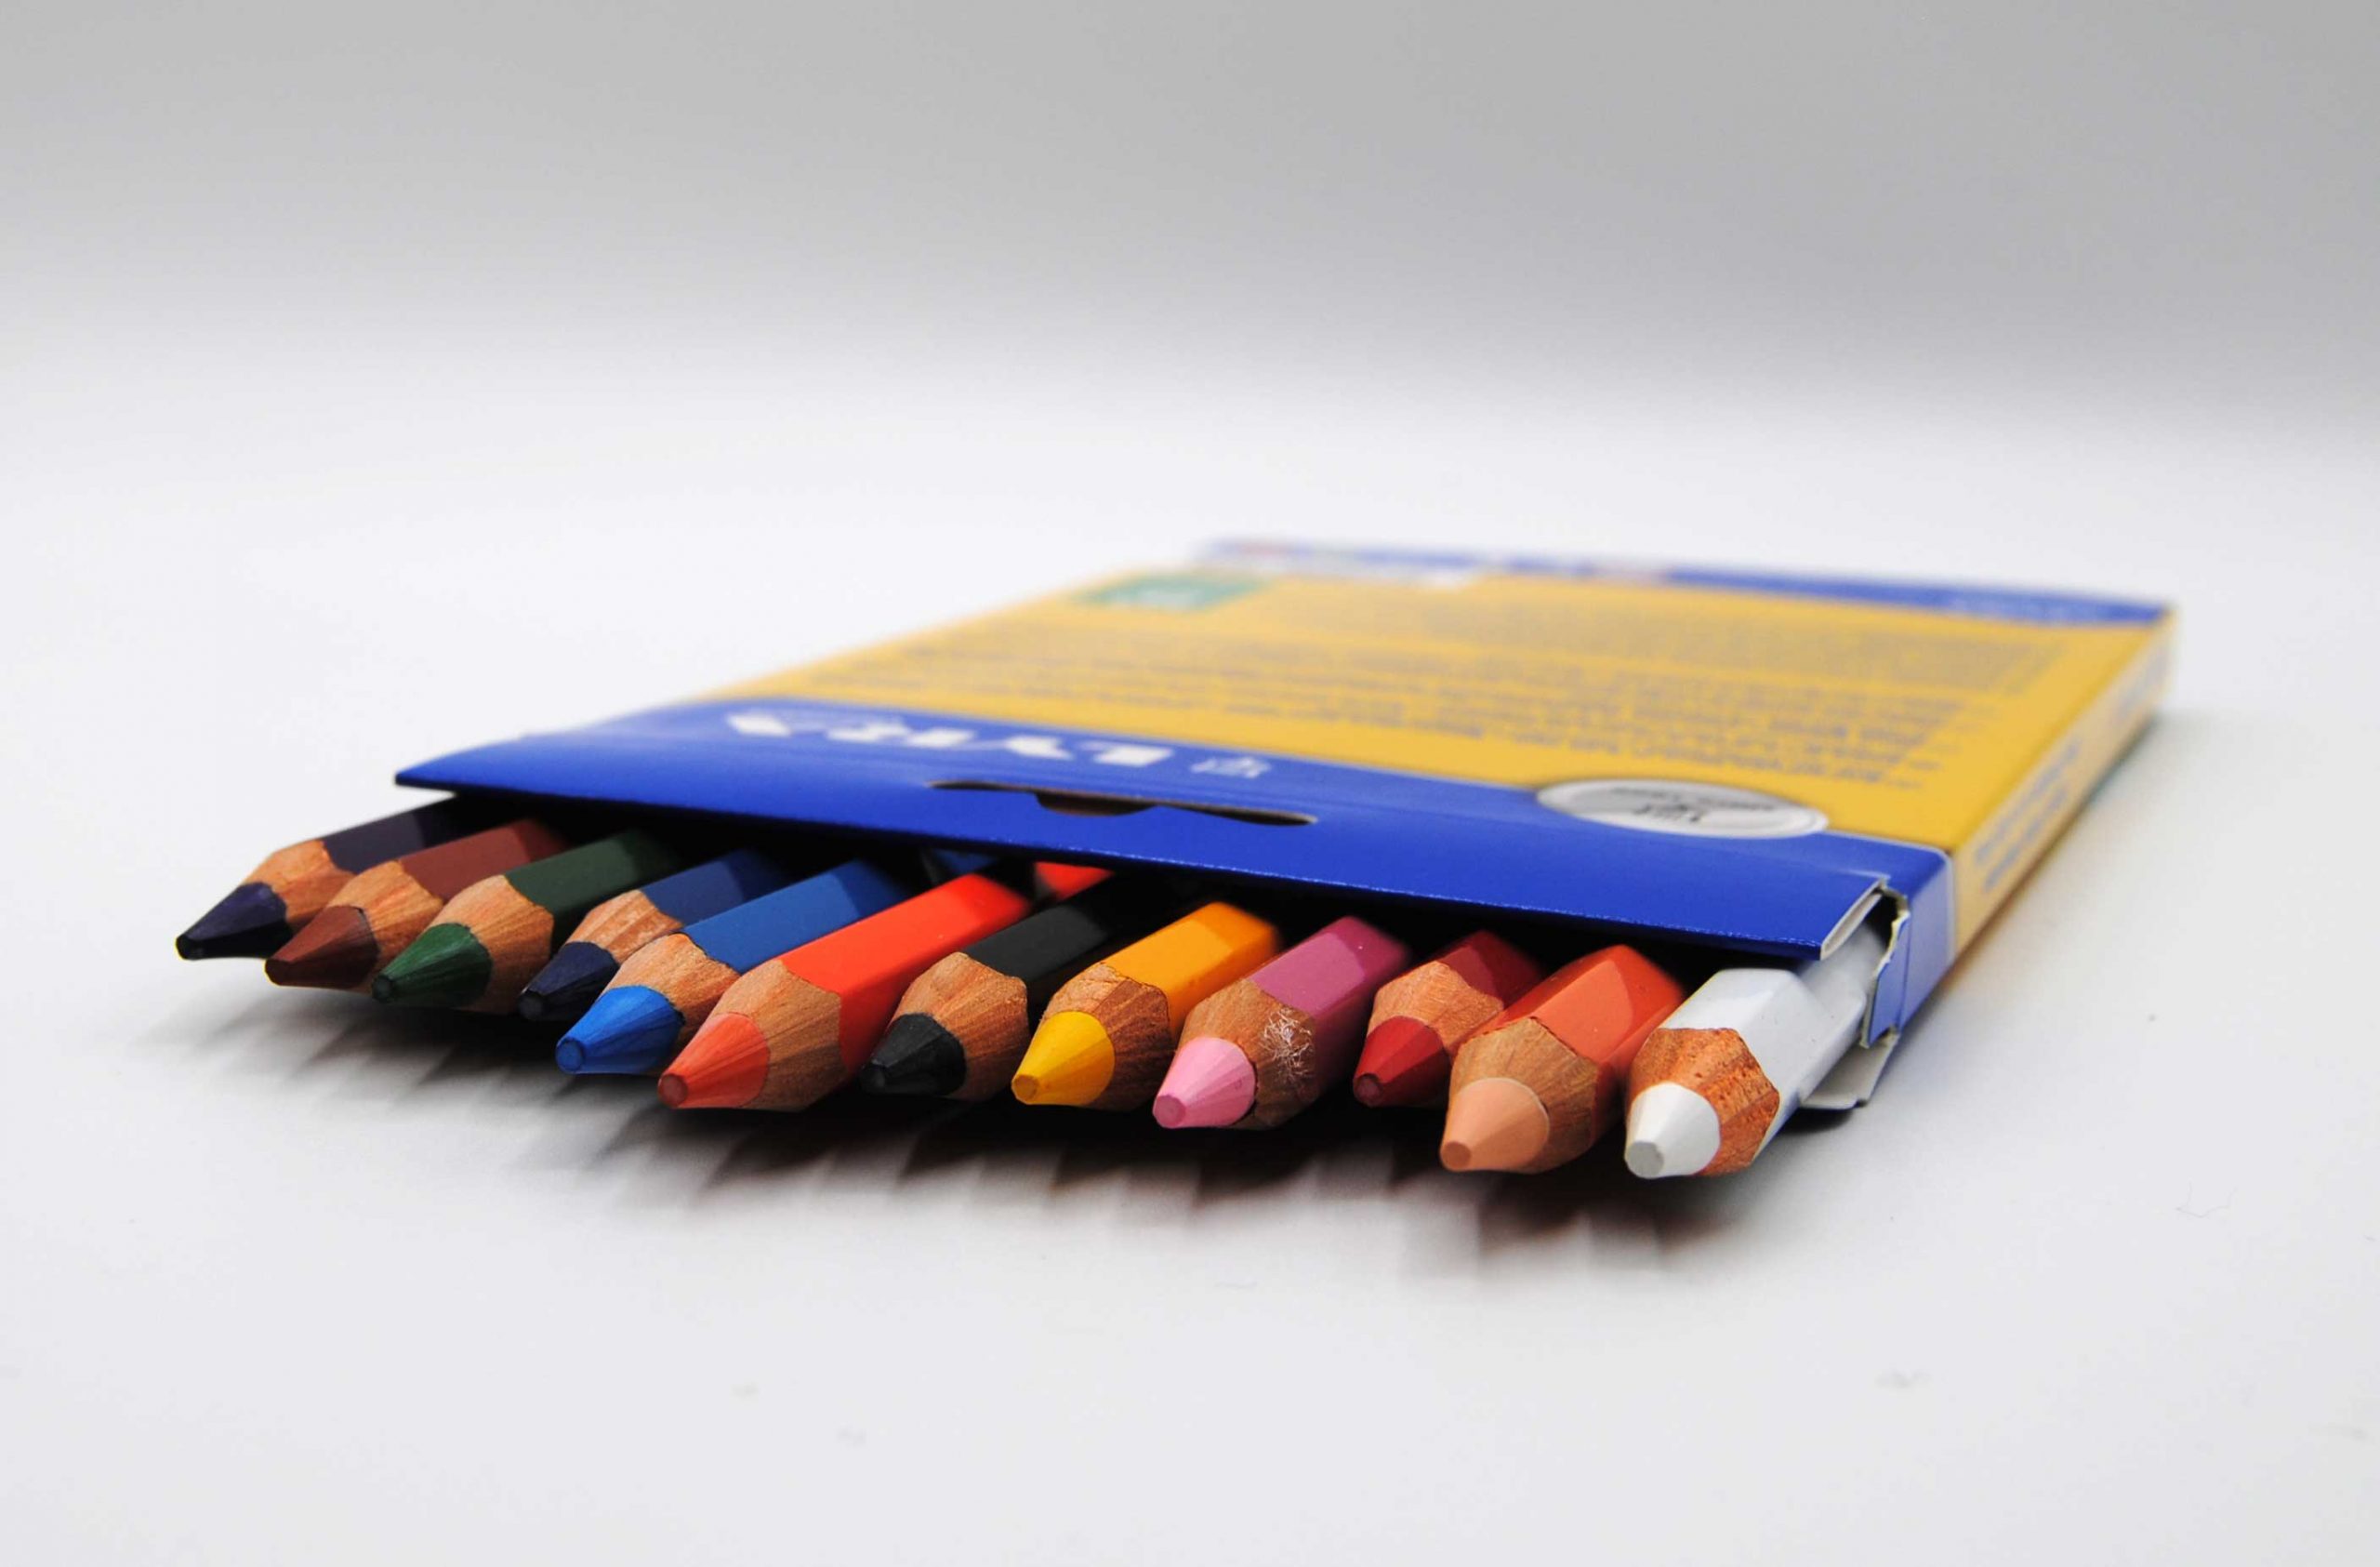 3 x LYRA 4-COLOR Giant Super Jumbo Colouring Pencils Natural Wood Finish